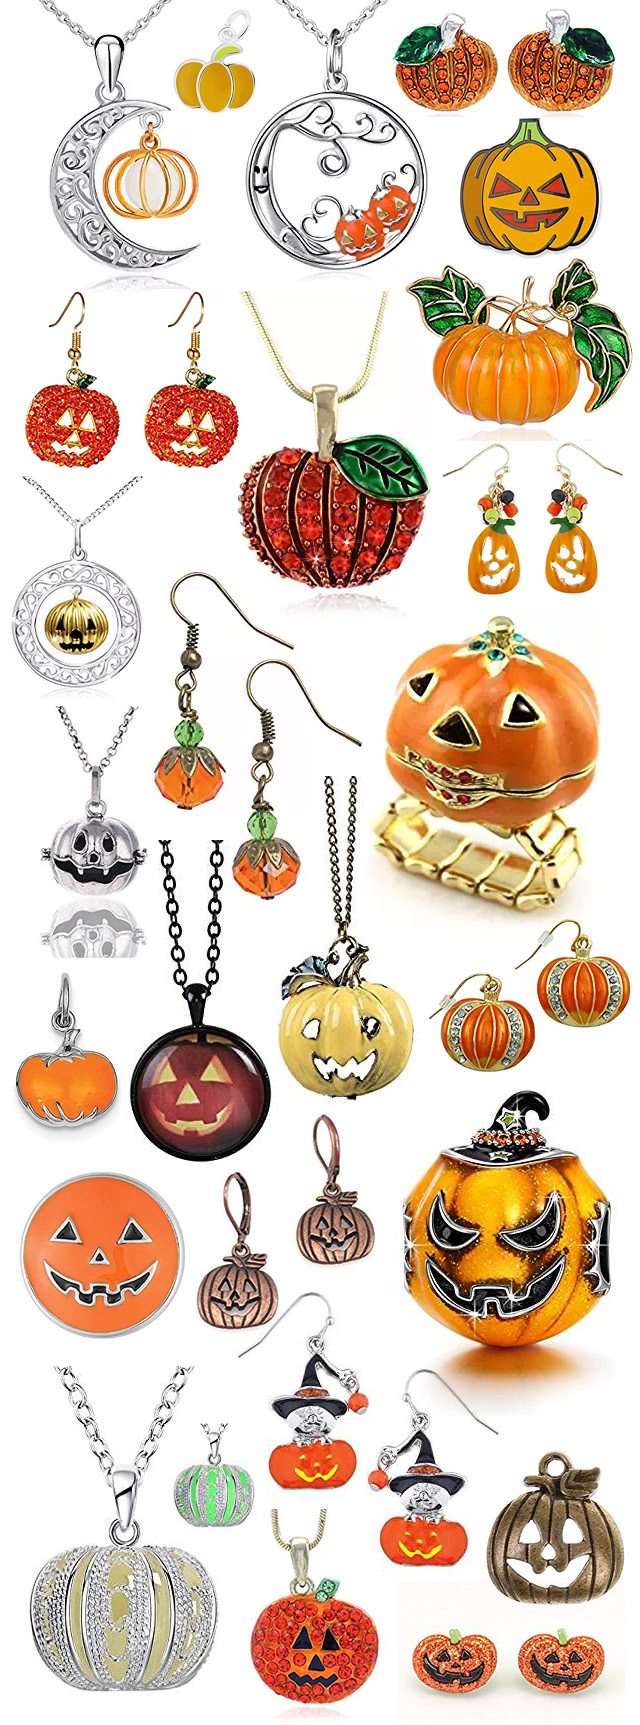 Pumpkin Jewelry